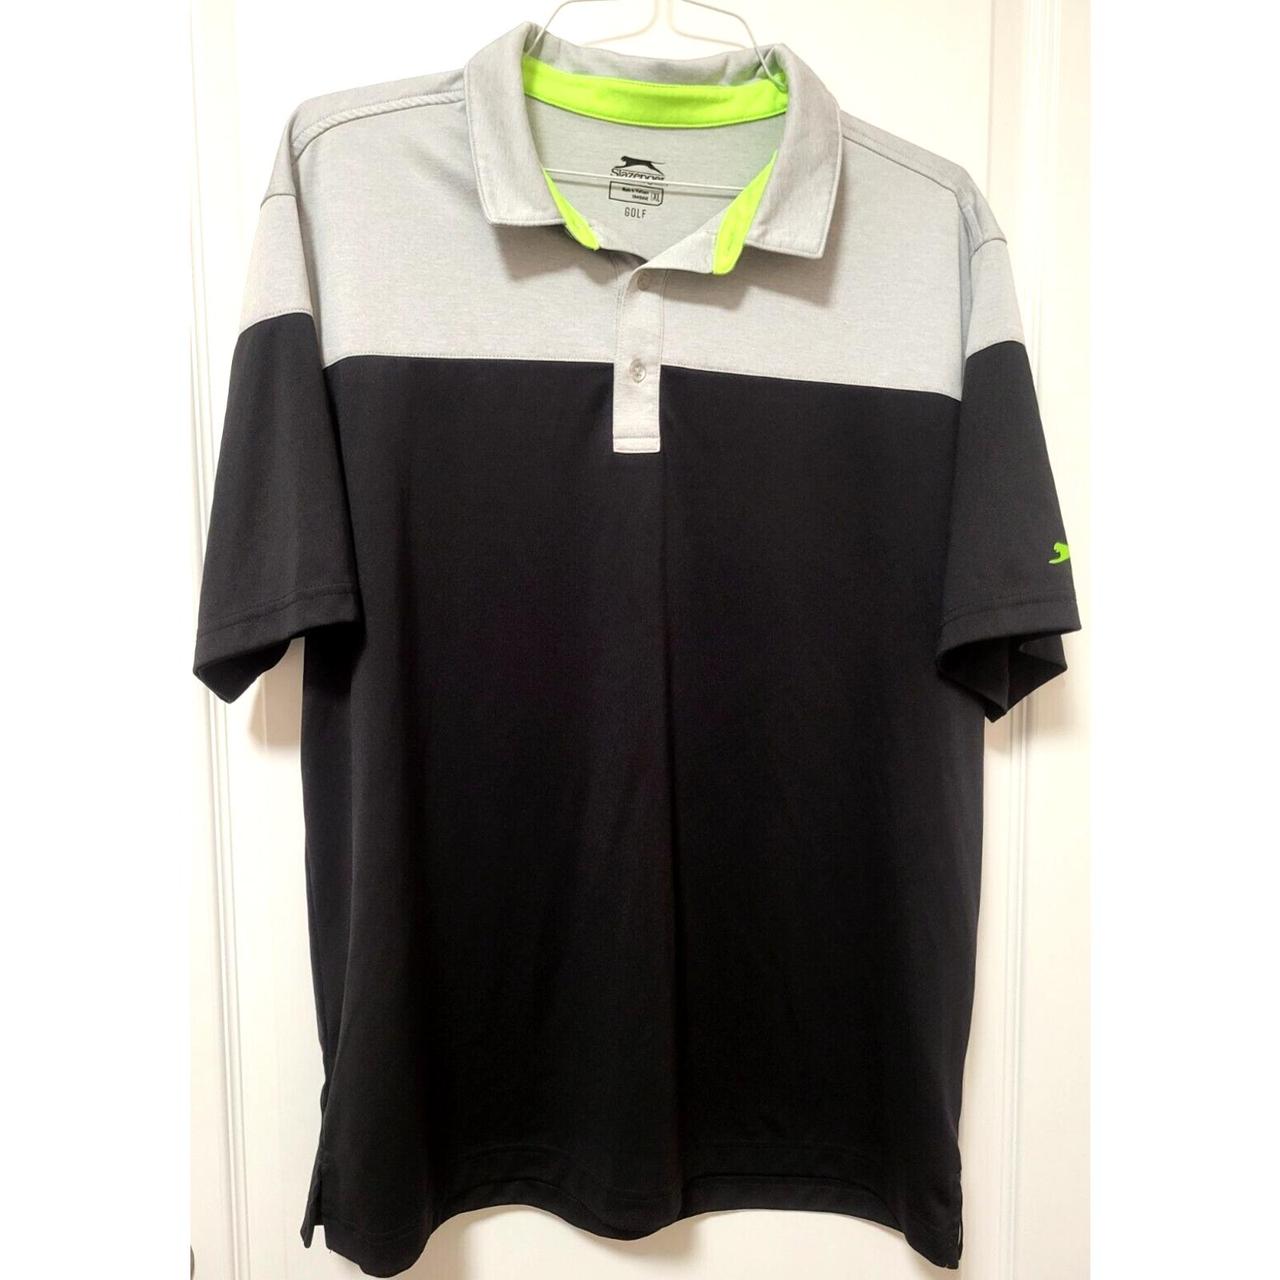 Slazenger Golf Shirt | old.kaminakoda.ee